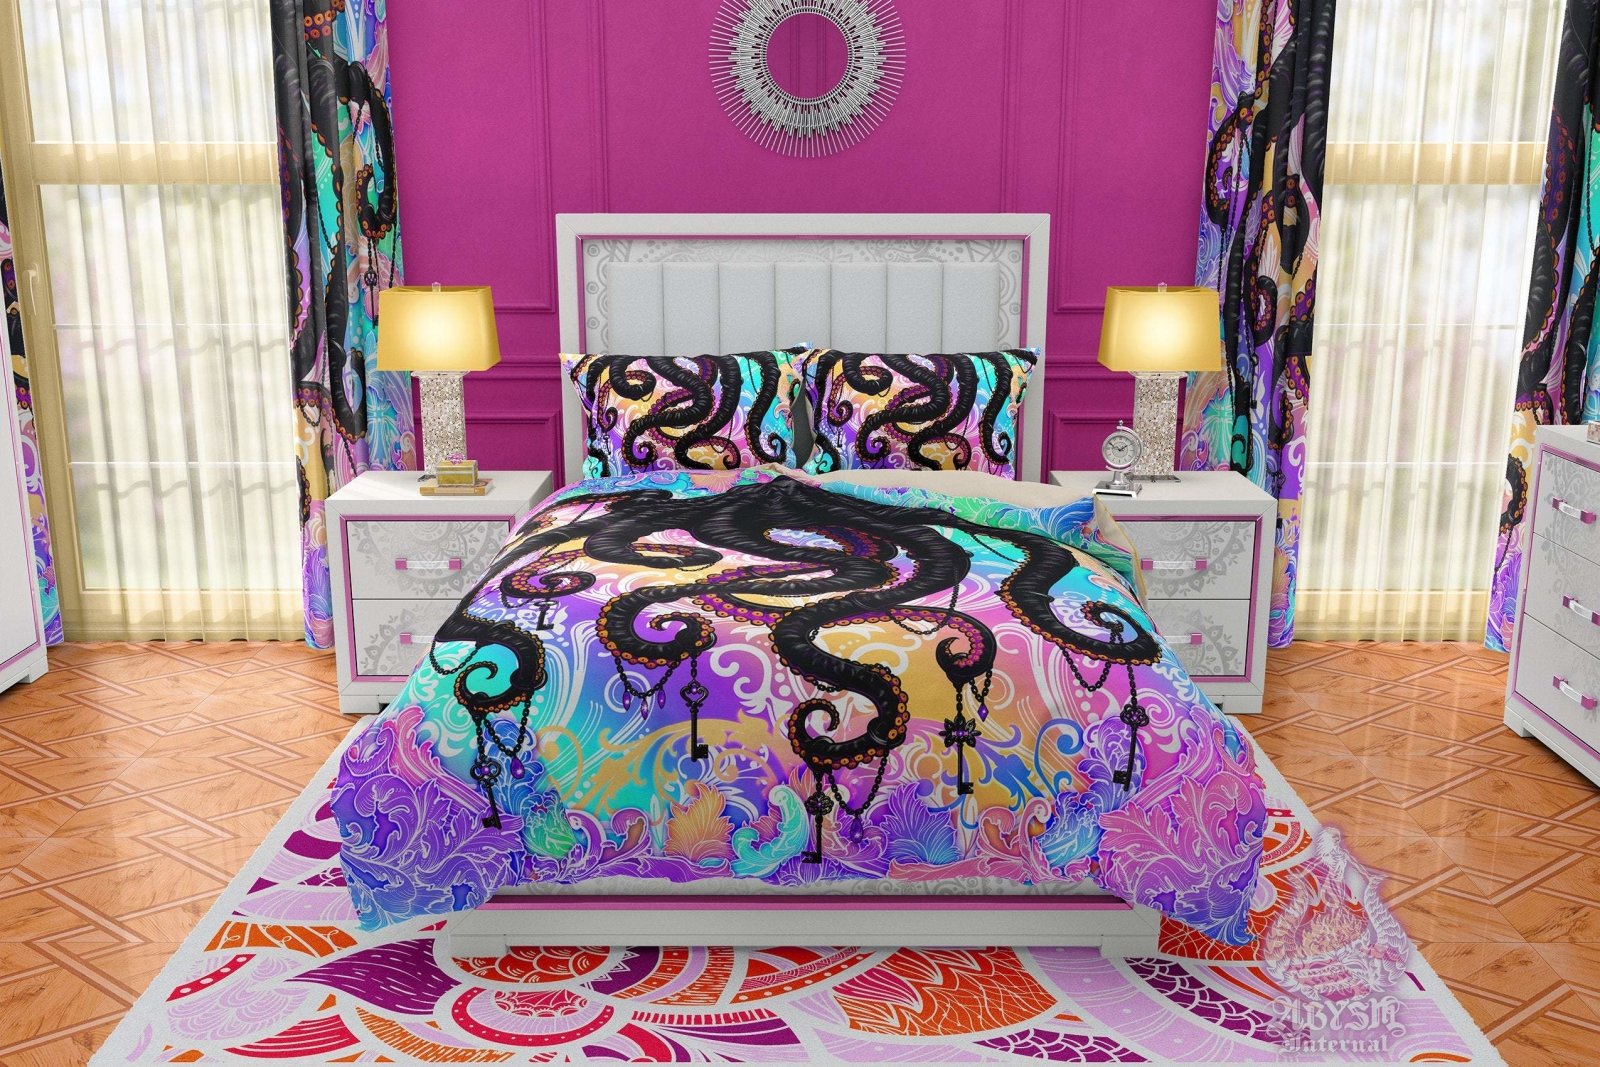 Soft Purple Grid Bedding Set – Roomeme